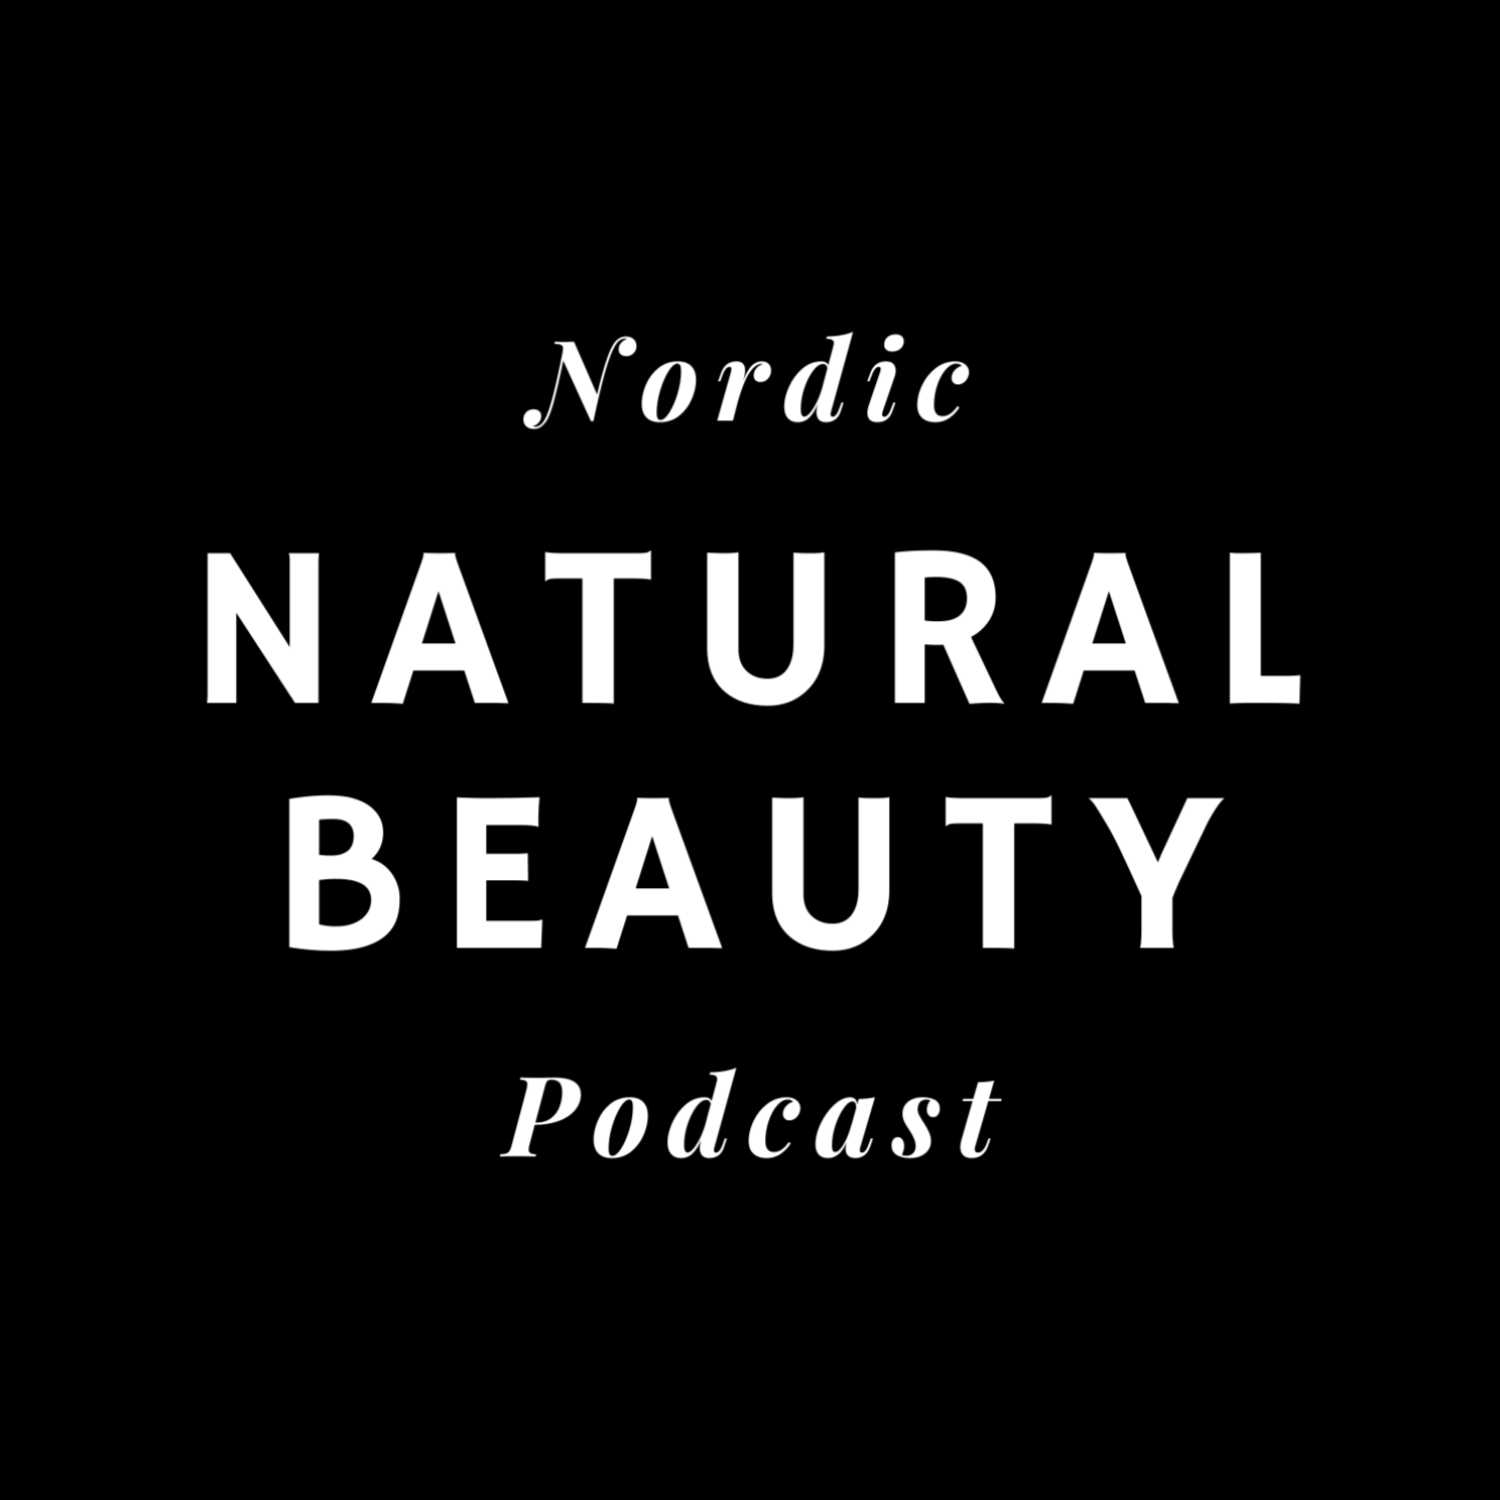 Behind The Scenes Of An Icelandic Skincare Innovation | With Gudrun Marteinsdottir, The Founder Of Taramar - An Award-Winning Skincare Brand